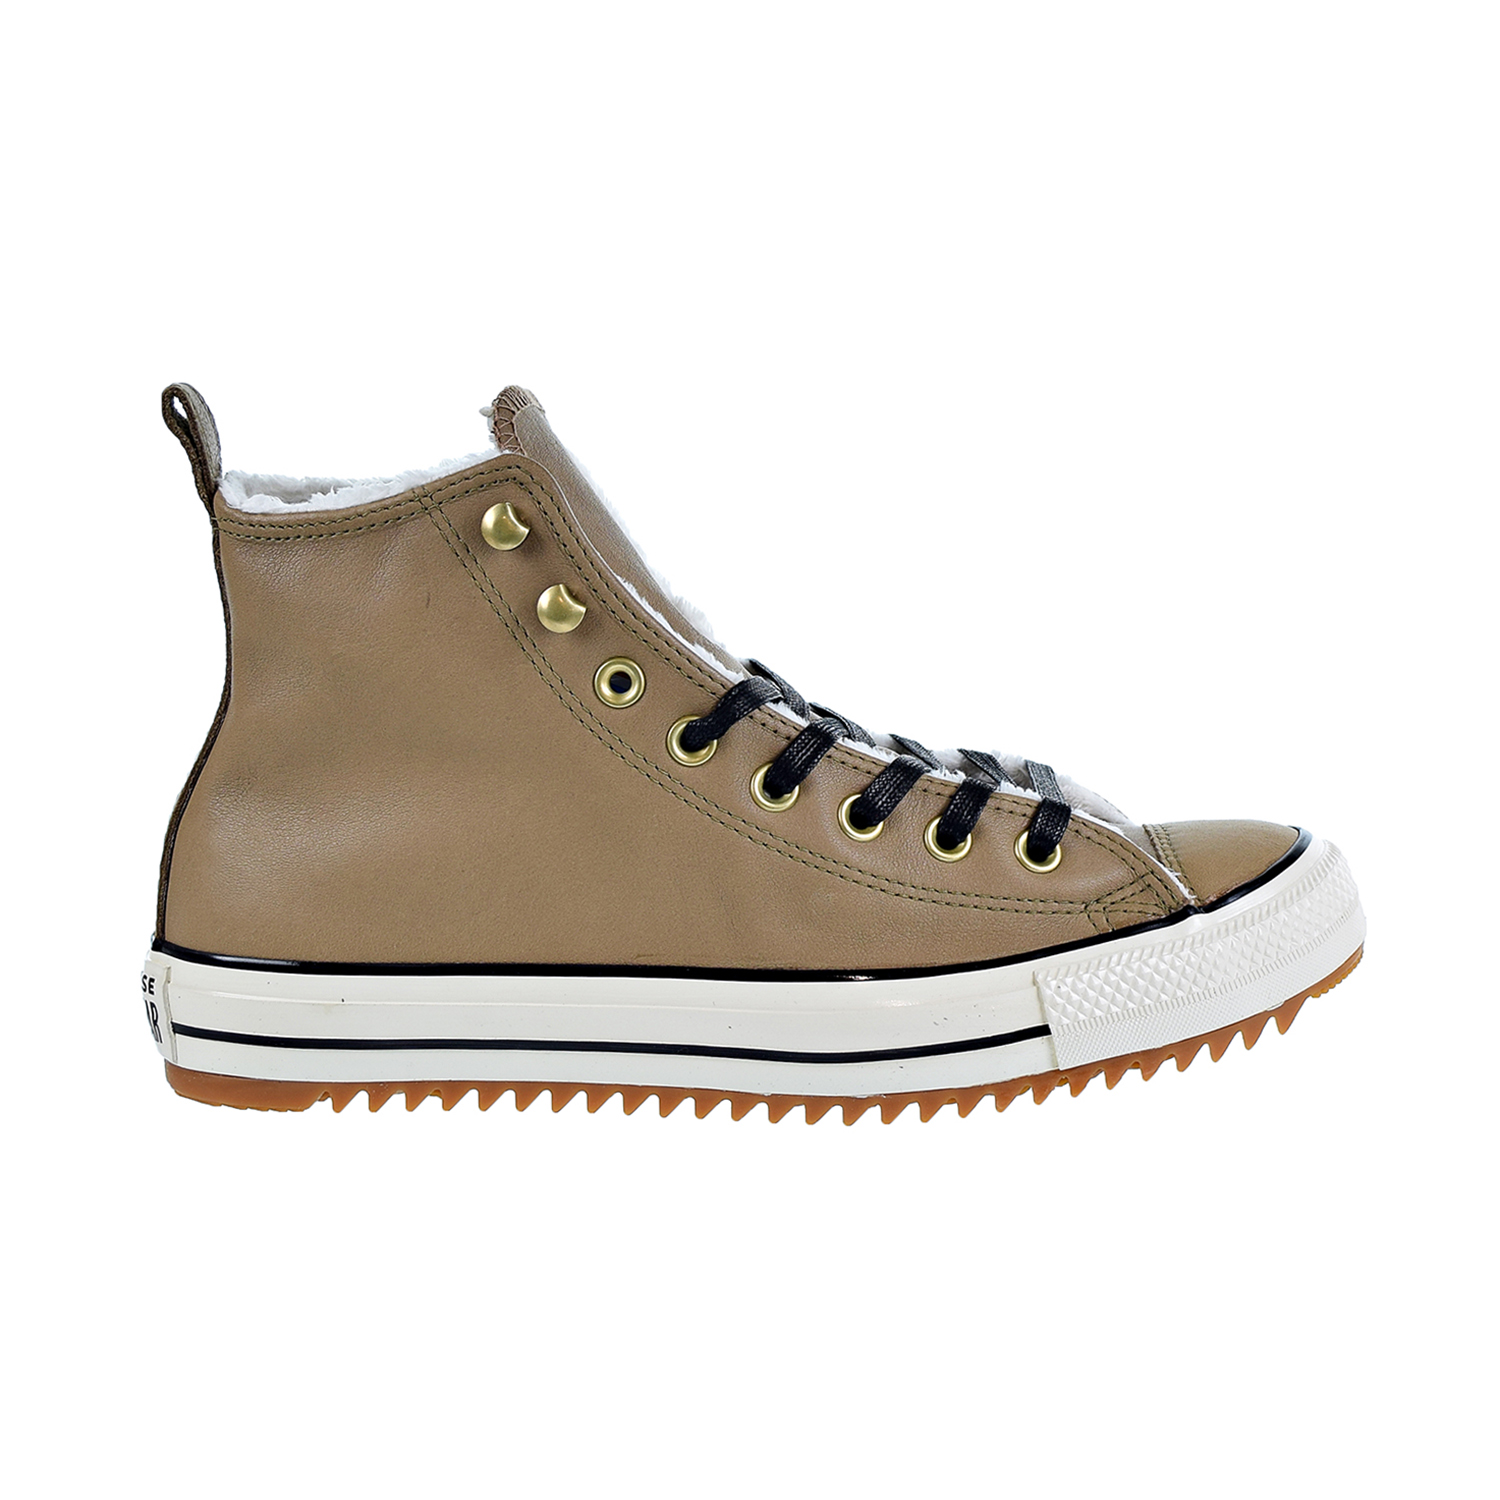 Converse Chuck Taylor All Star Hiker Boot Hi Unisex/Men's Shoes Teak-Black-Ivory 162479c - image 1 of 6